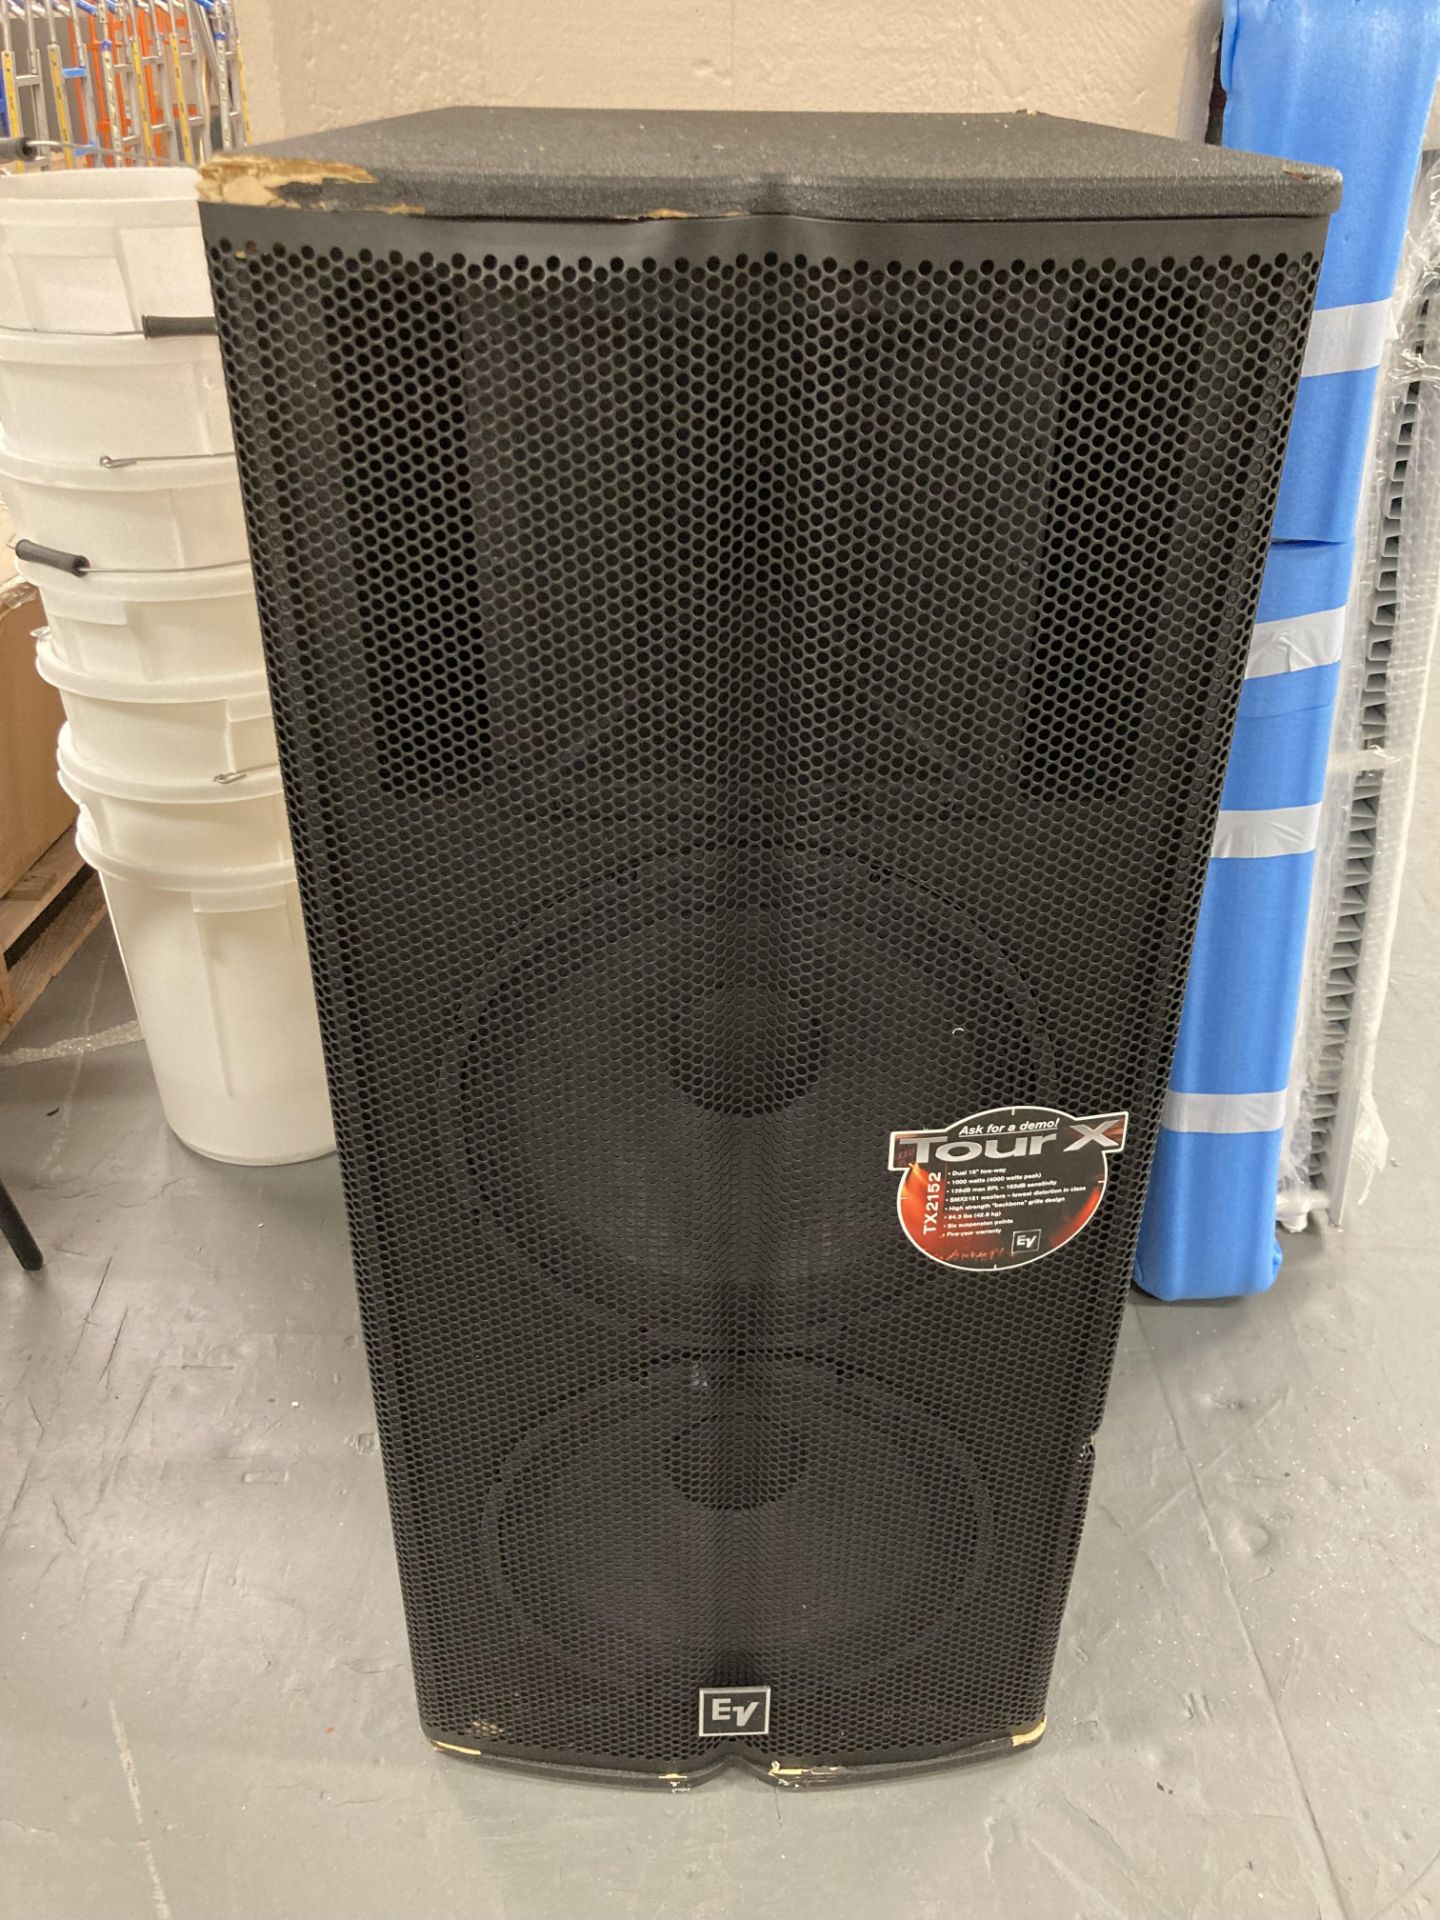 An Electro-Voice Tour X model TX2152 floor standing speaker CONDITION REPORT: